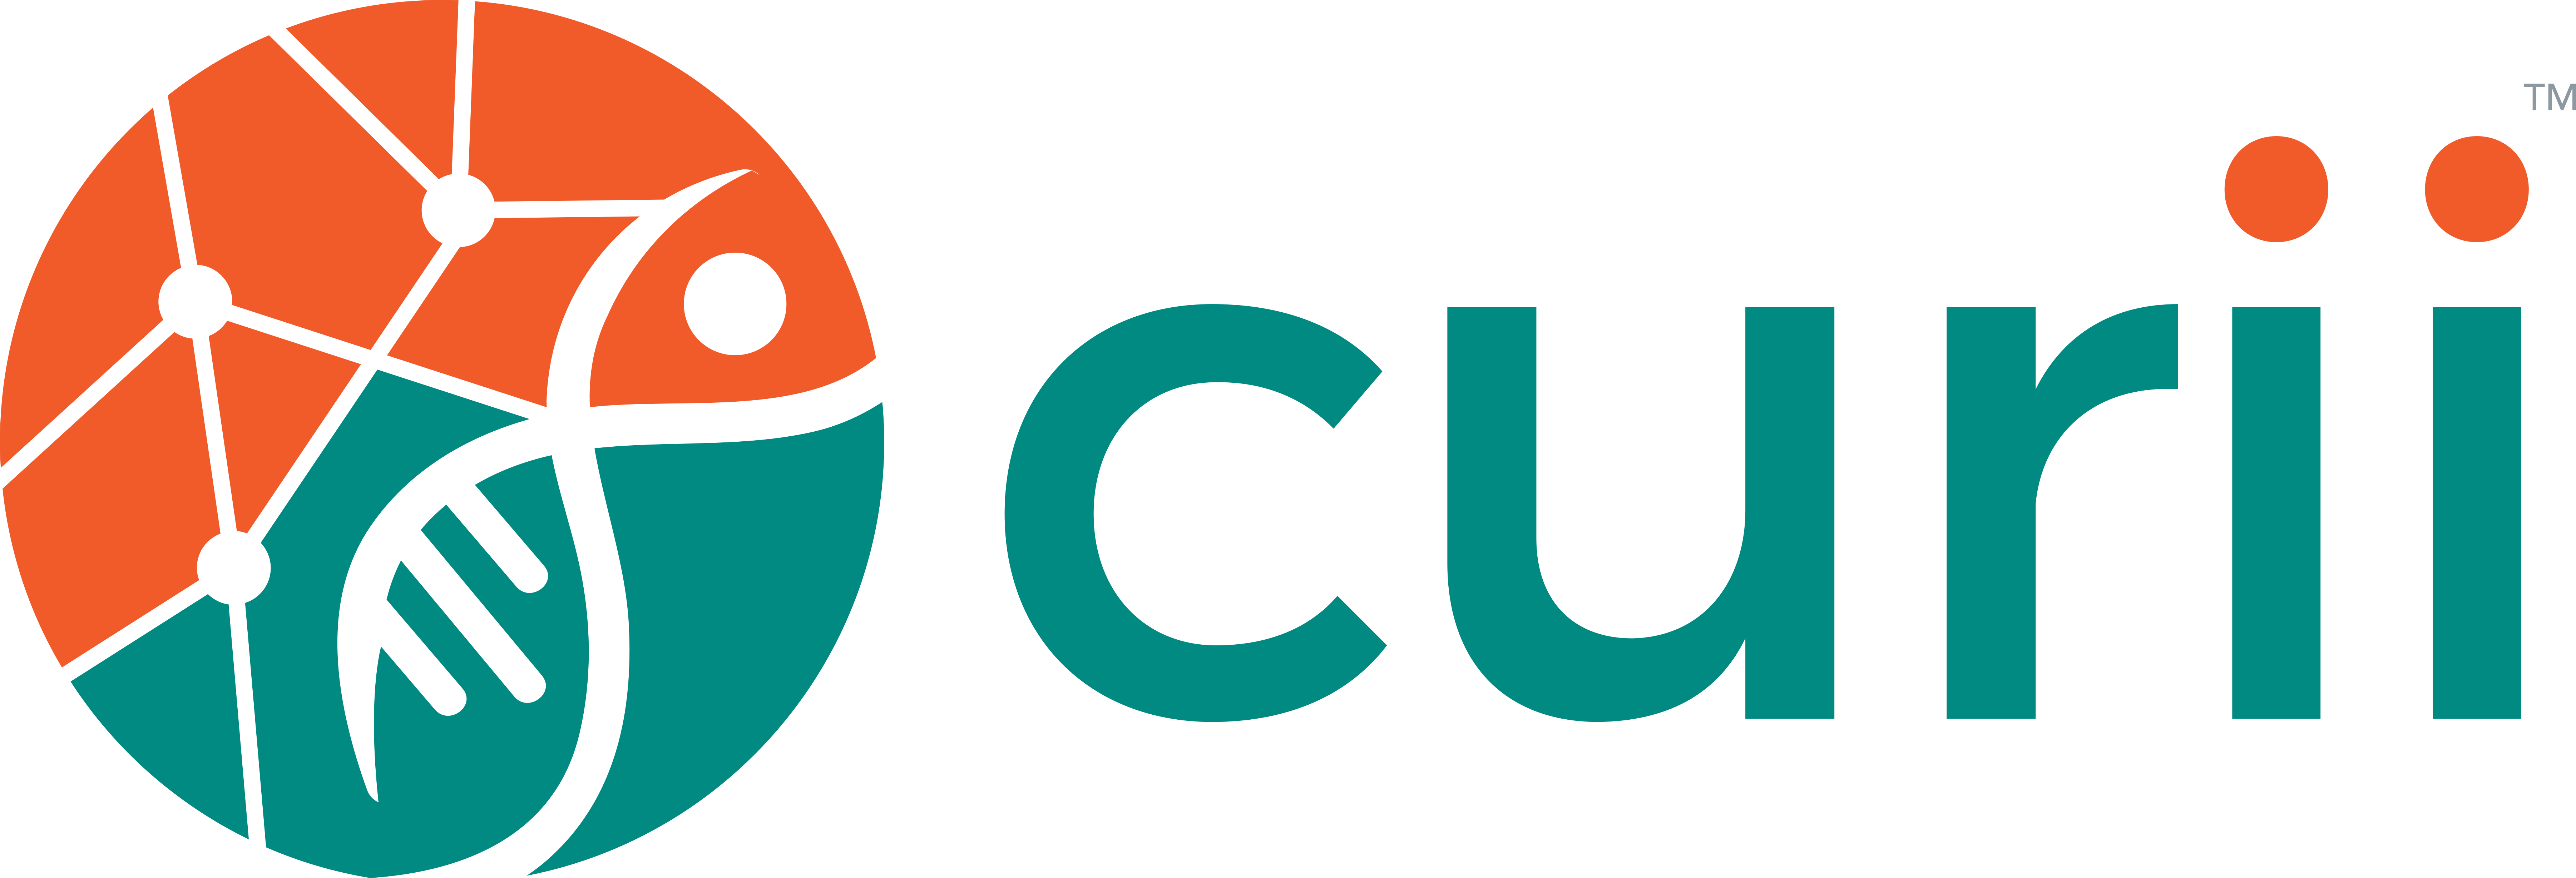 The Curii logo